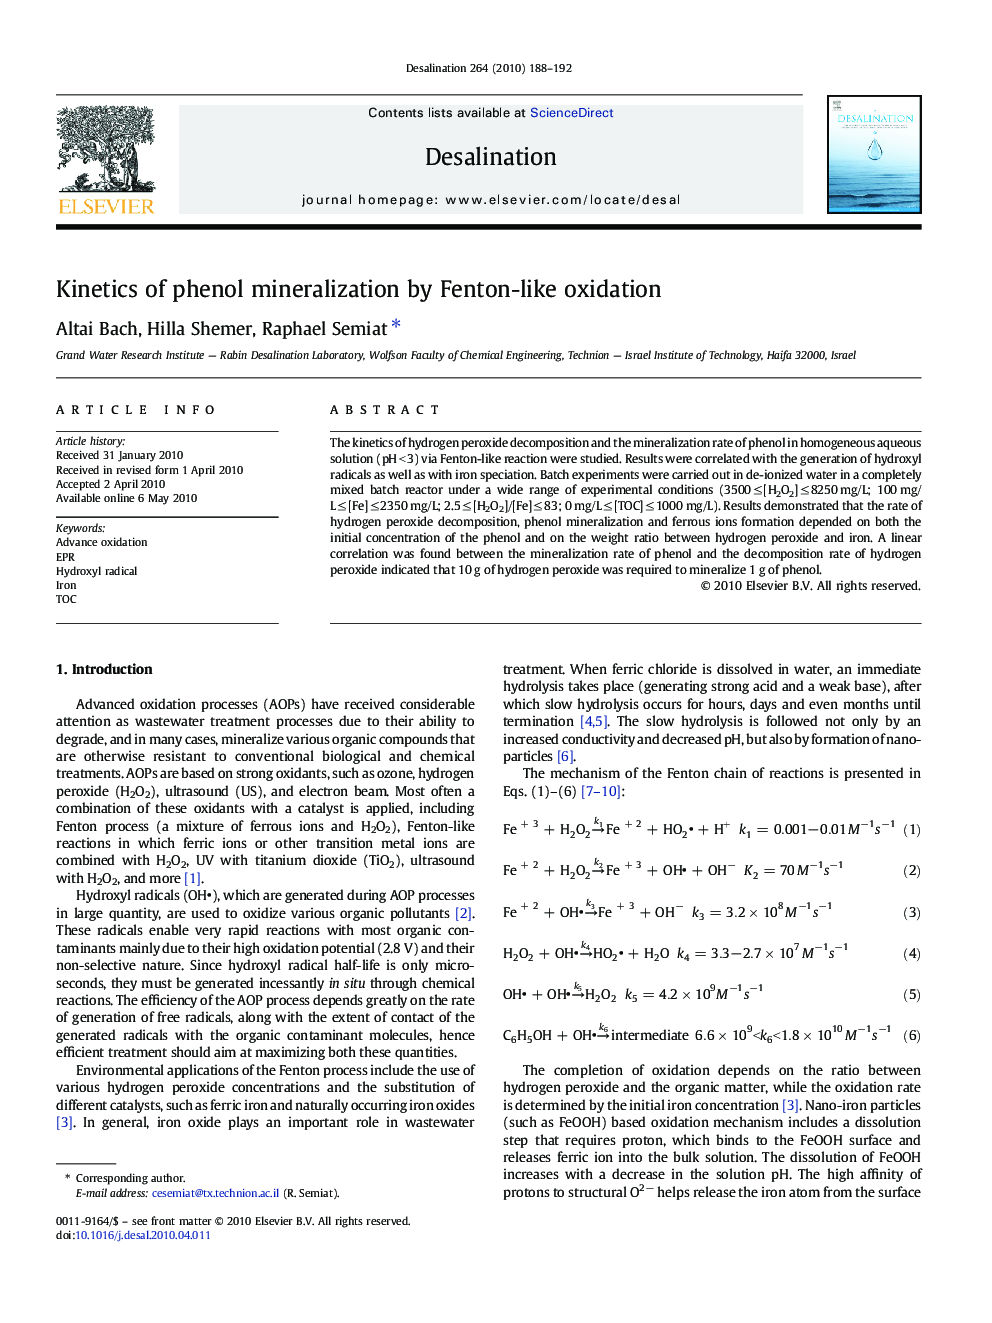 Kinetics of phenol mineralization by Fenton-like oxidation